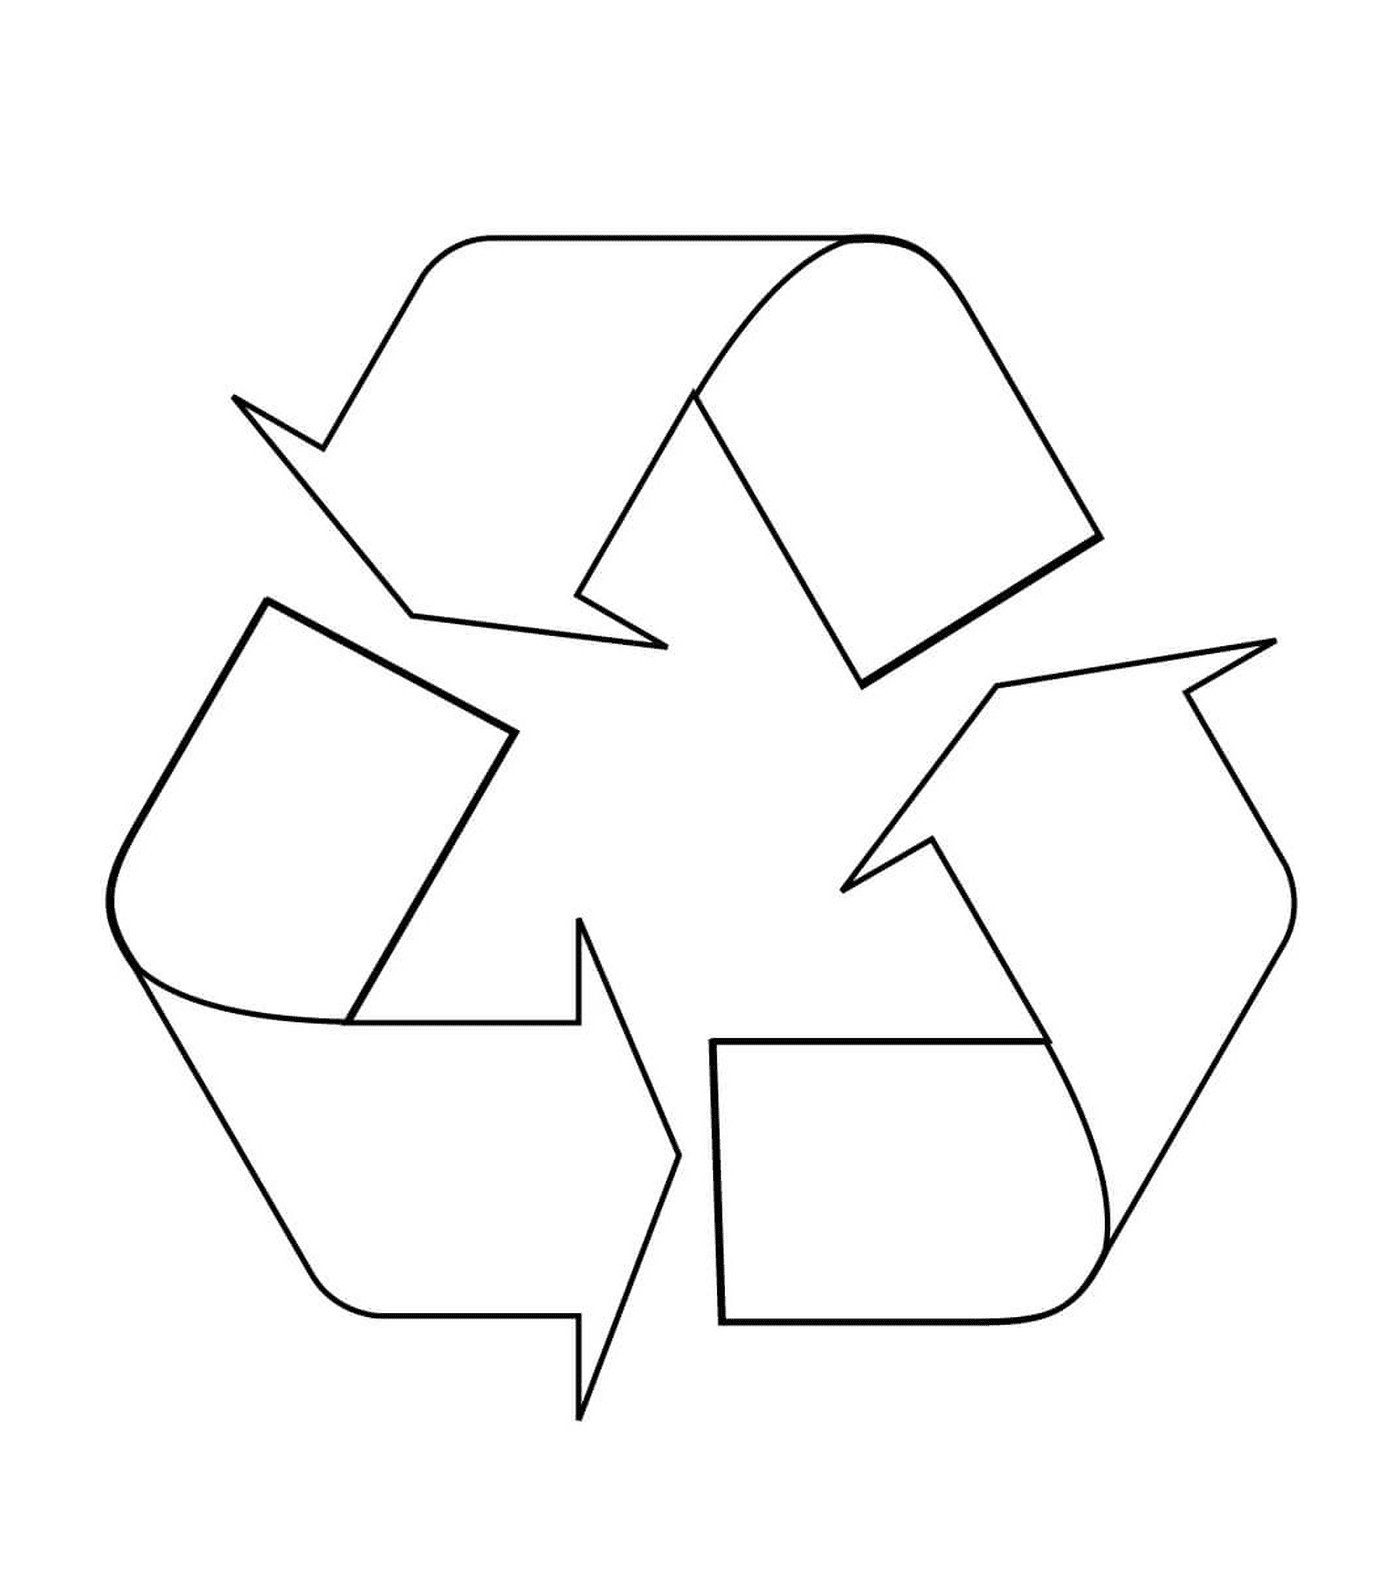  Logotipo de reciclagem, pense sobre o meio ambiente 